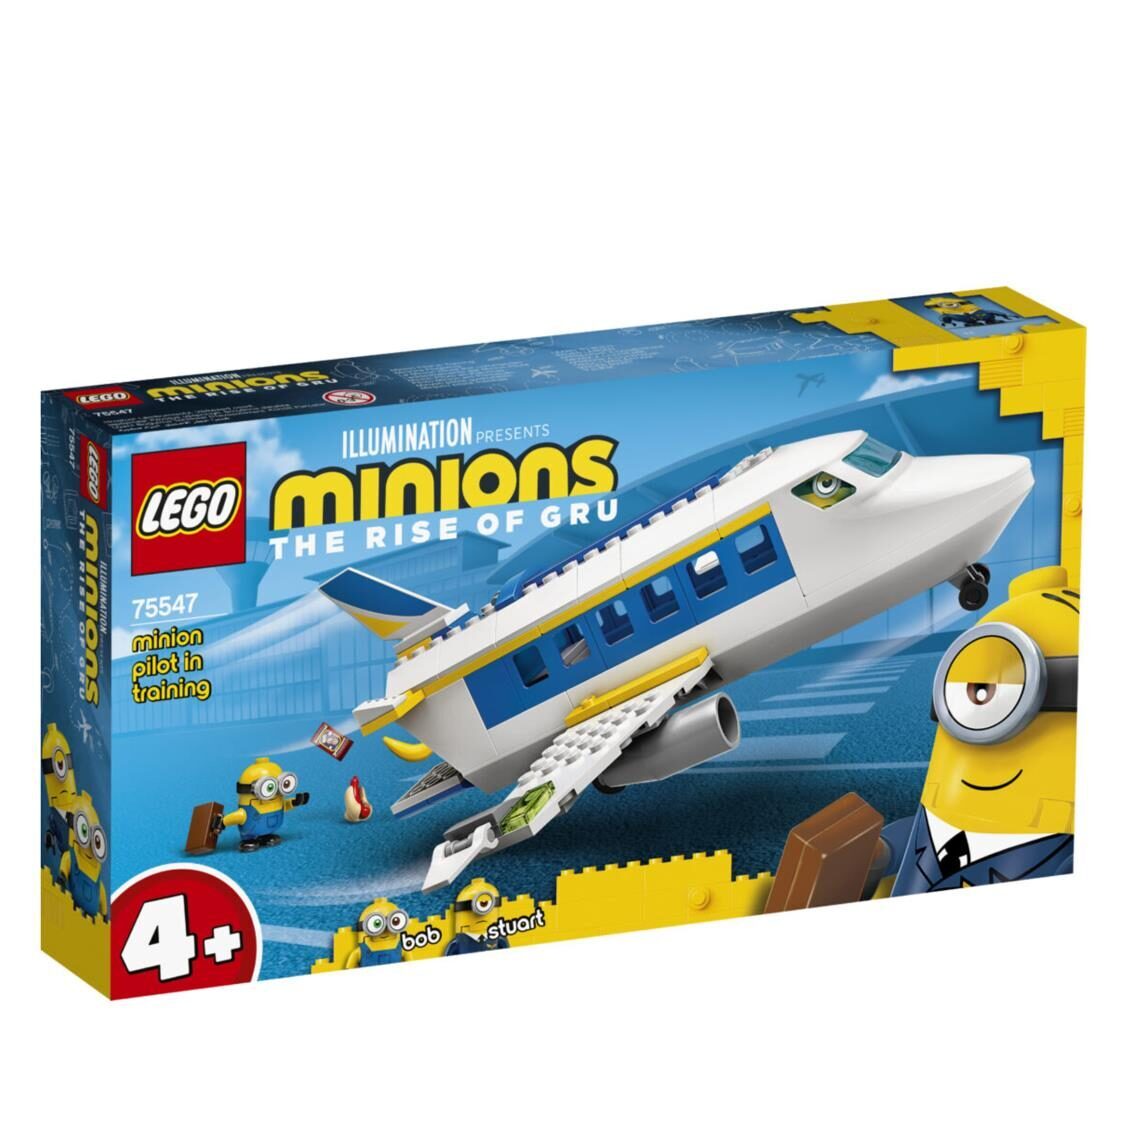 LEGO Minions - Minion Pilot in Training 75547